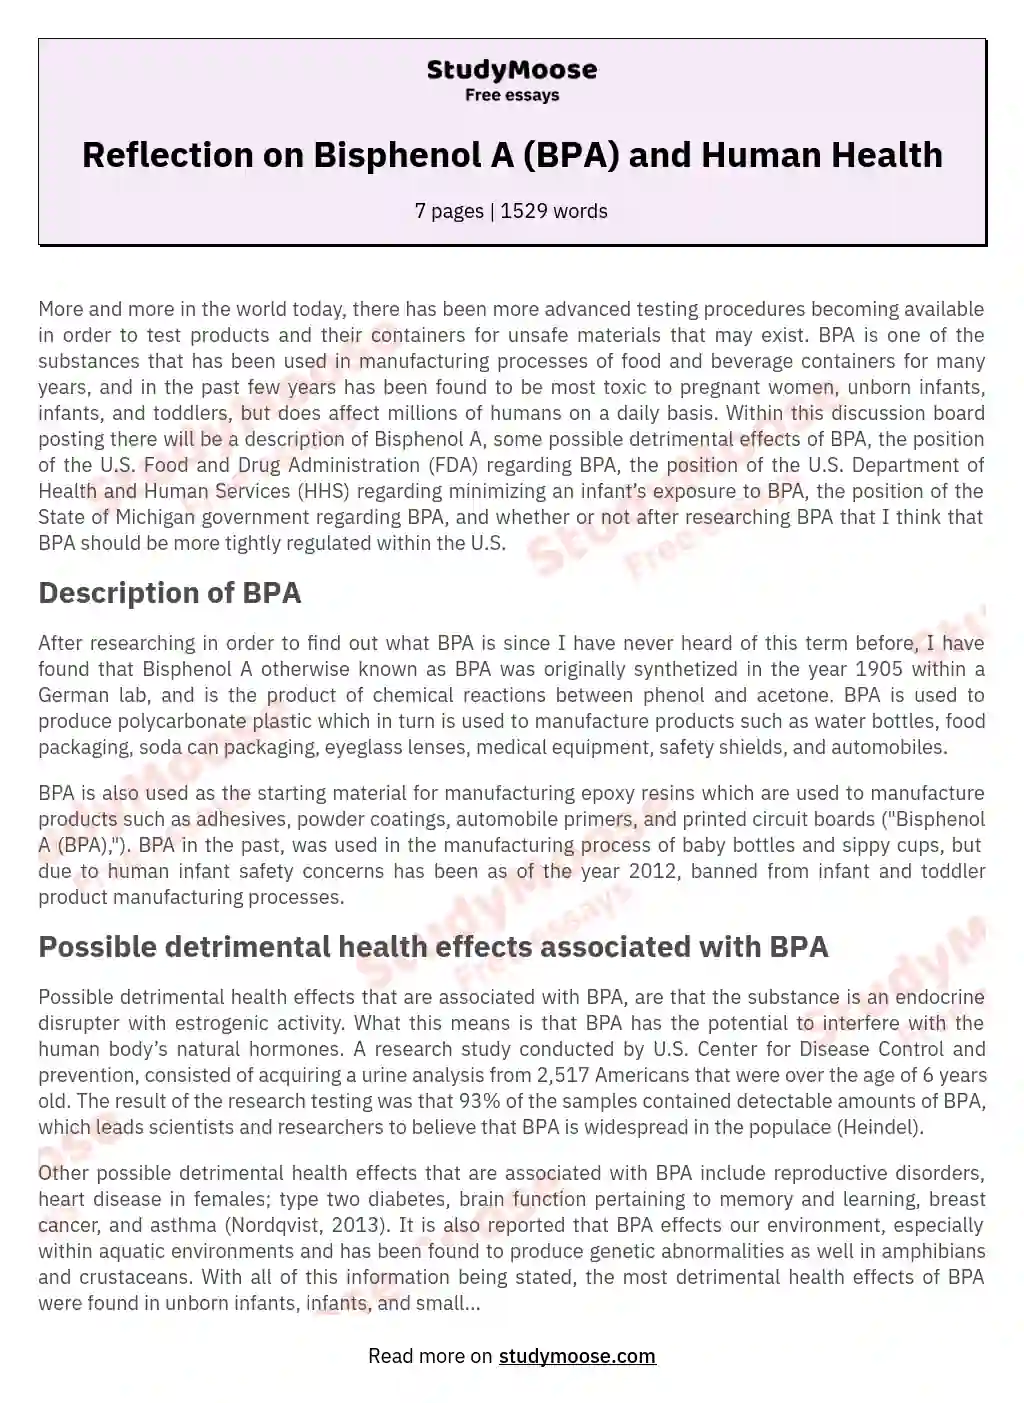 Reflection on Bisphenol A (BPA) and Human Health essay